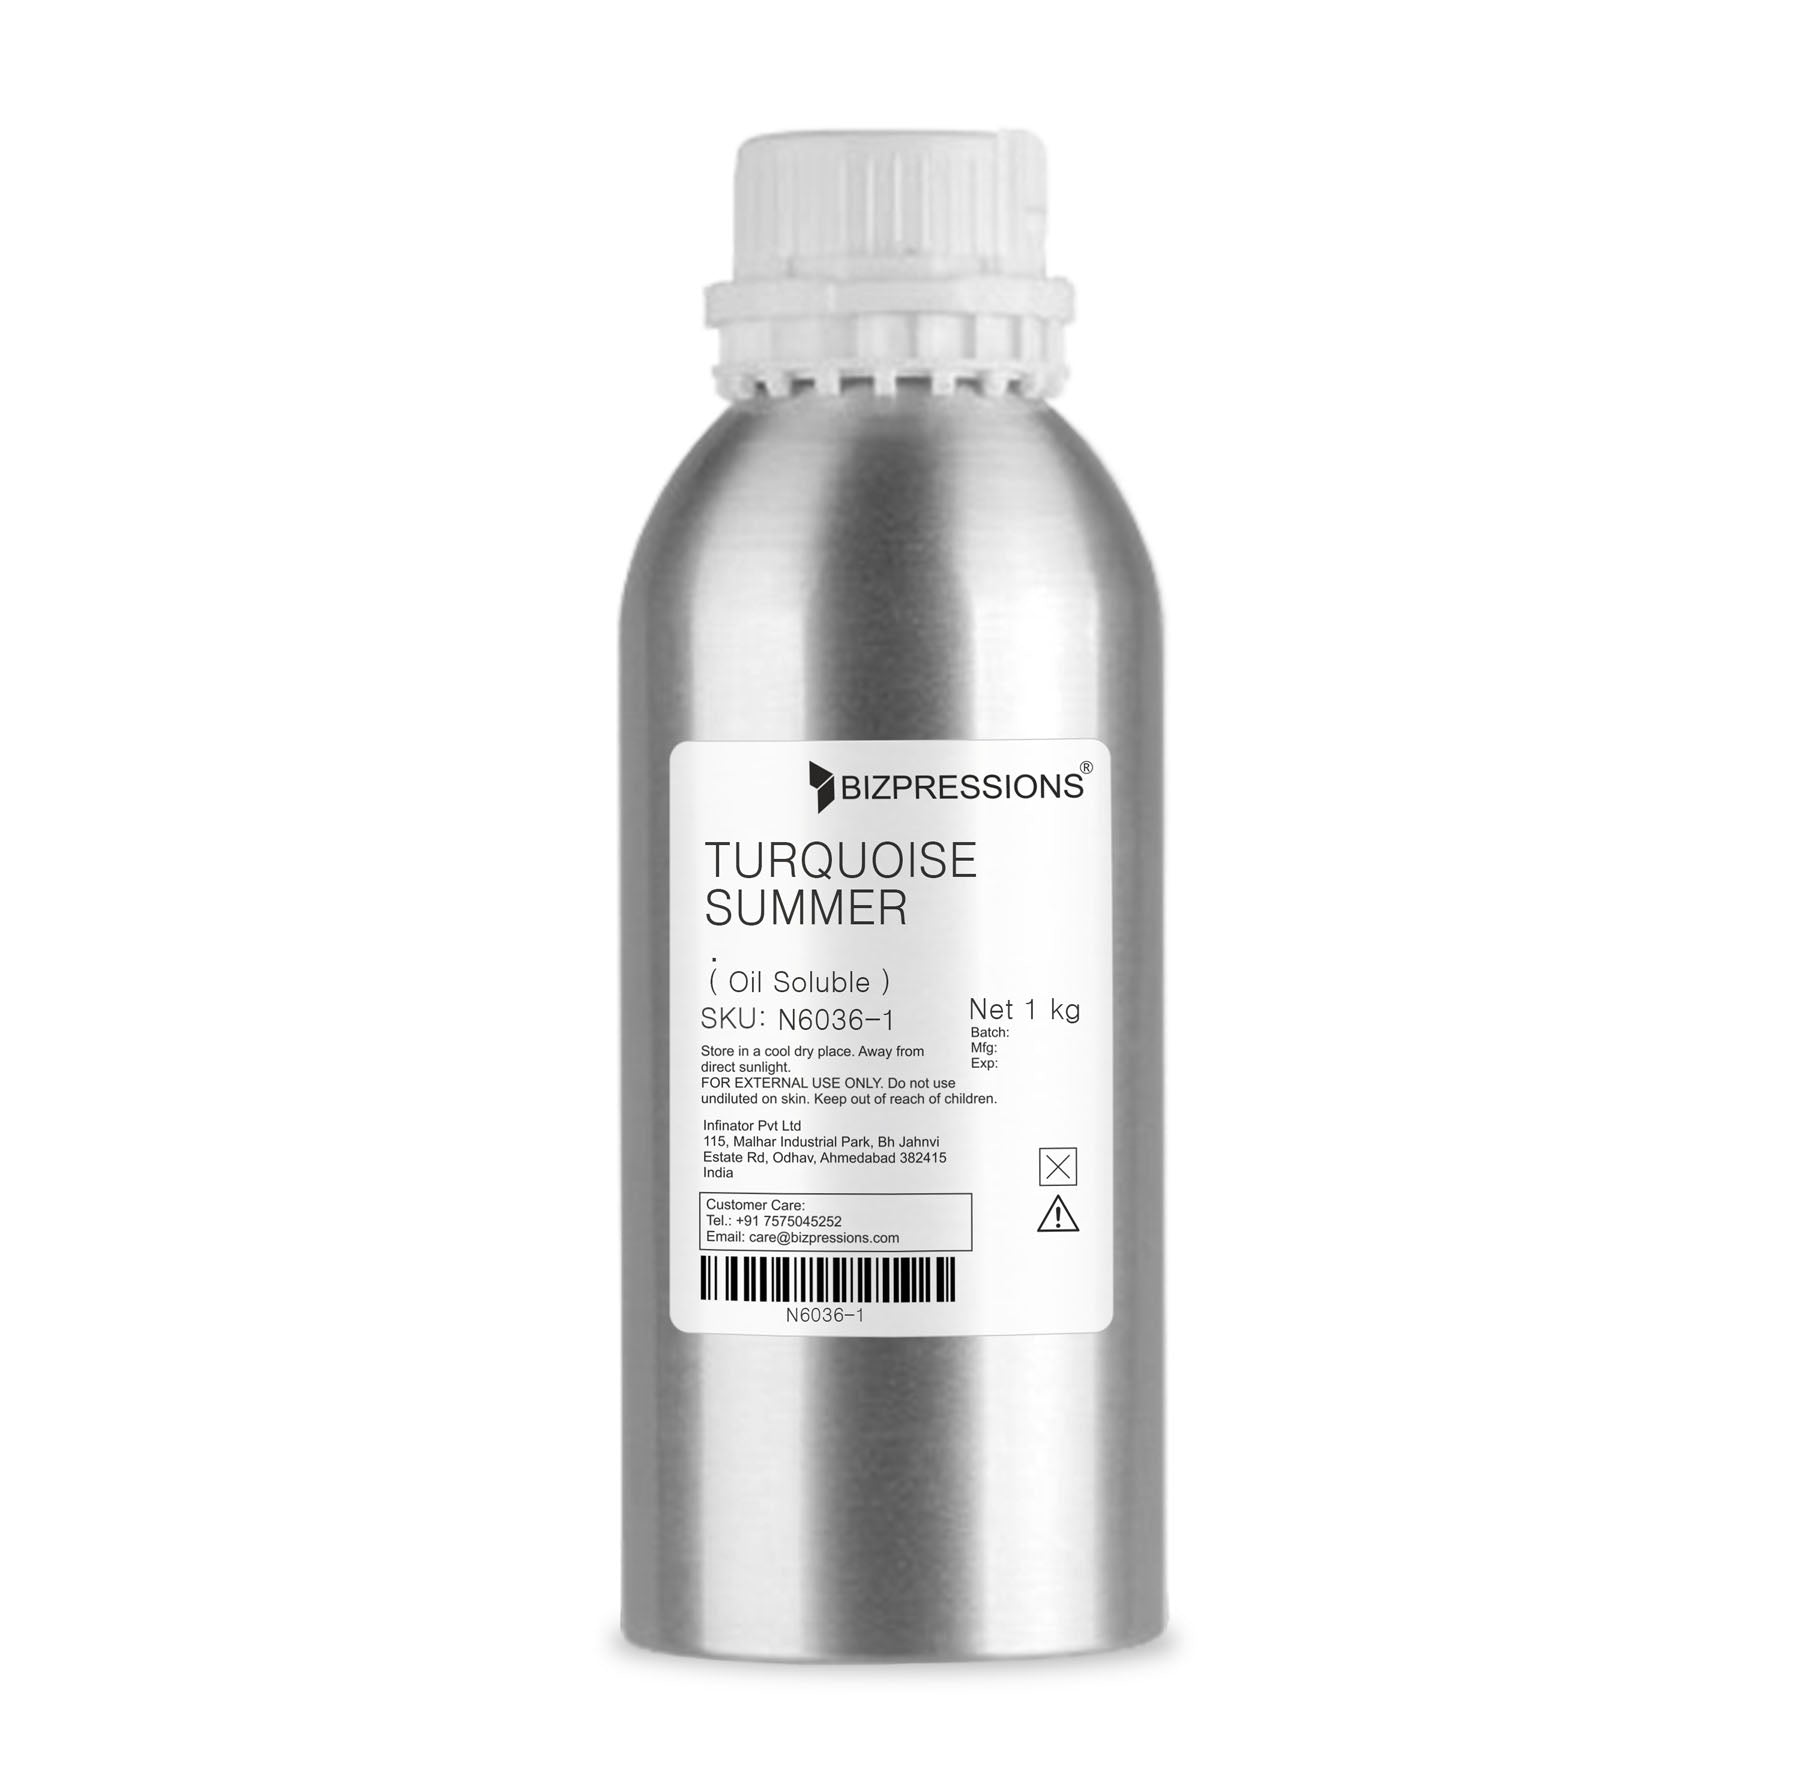 TURQUOISE SUMMER - Fragrance ( Oil Soluble ) - 1 kg